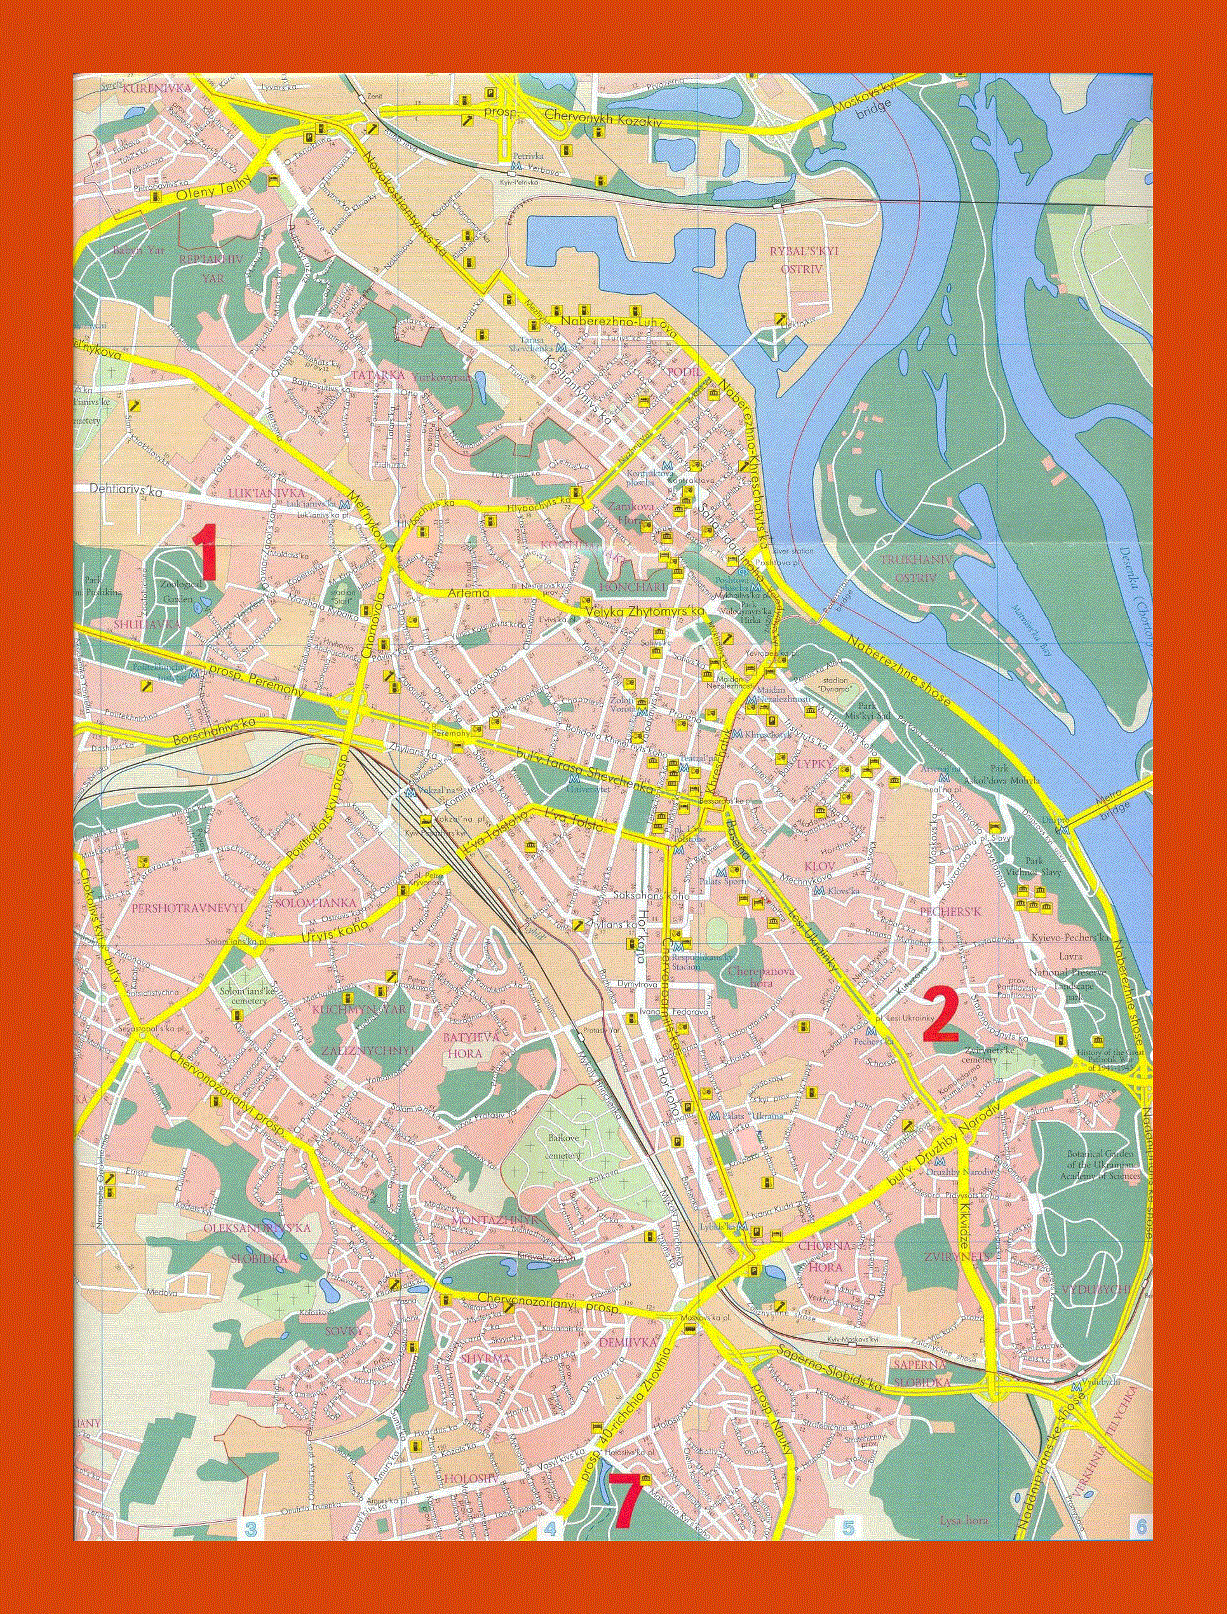 Street map of Kiev city center